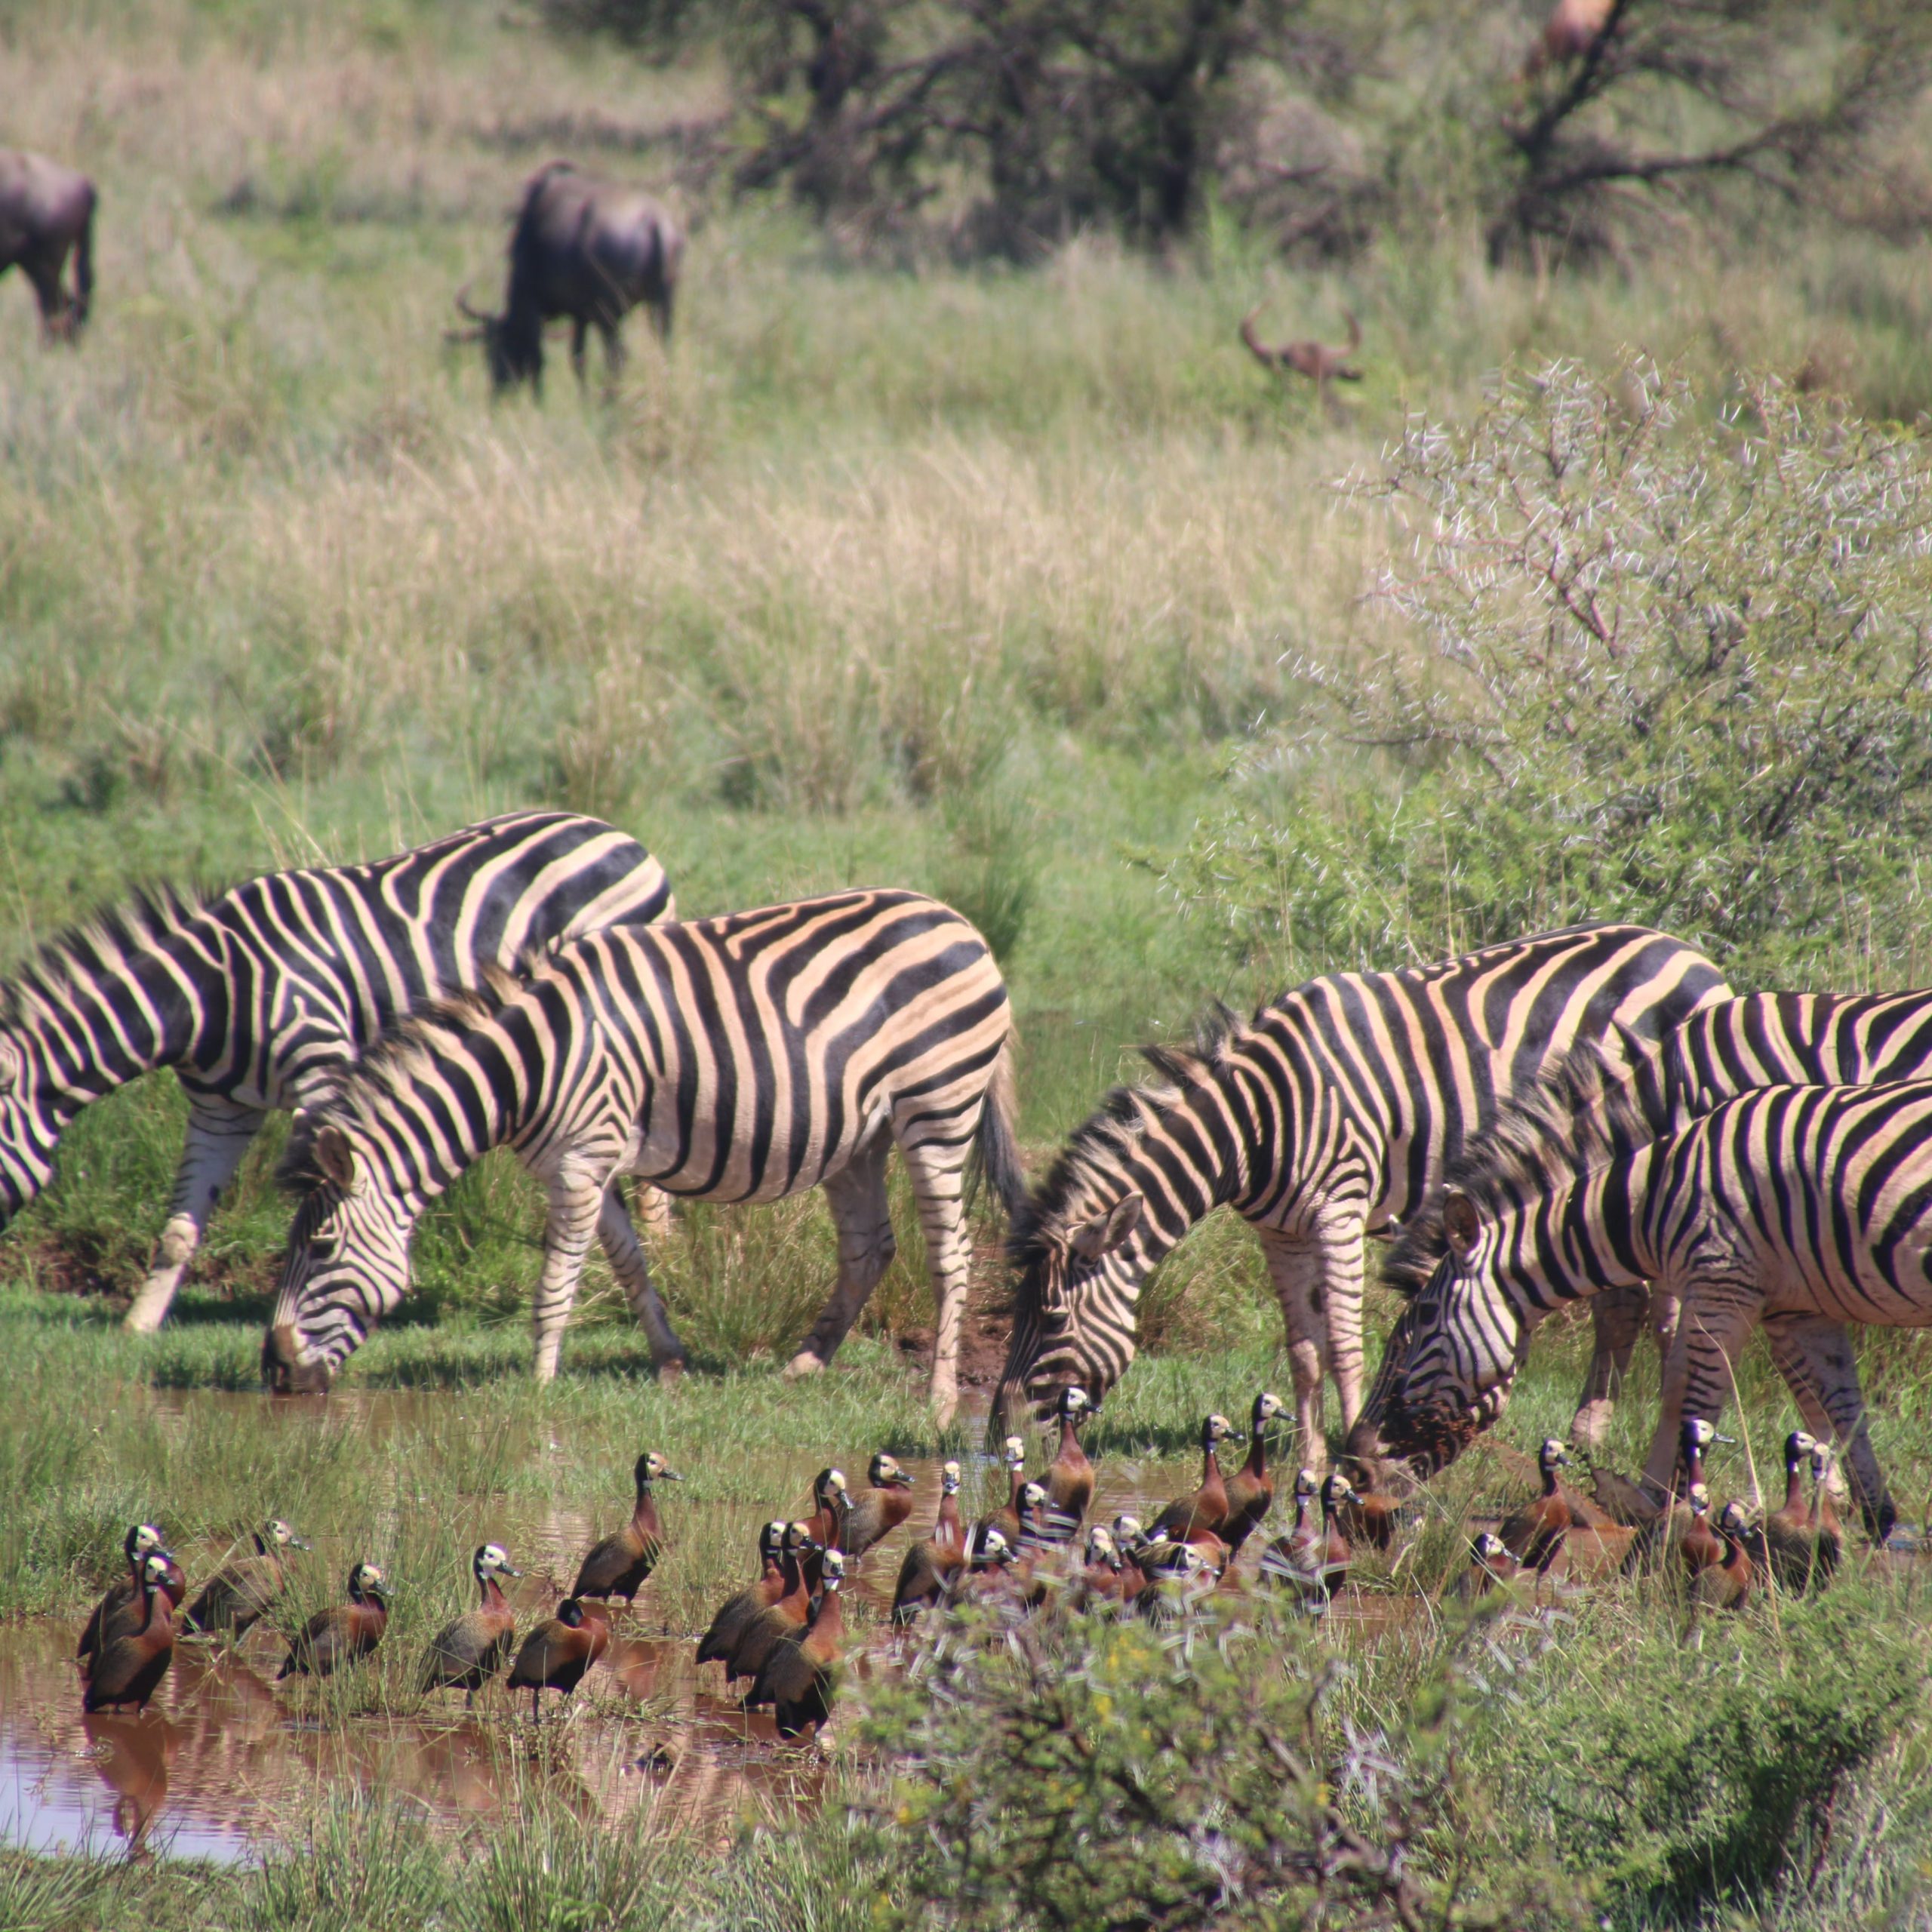 Day 3 Manyara to Serengeti national park